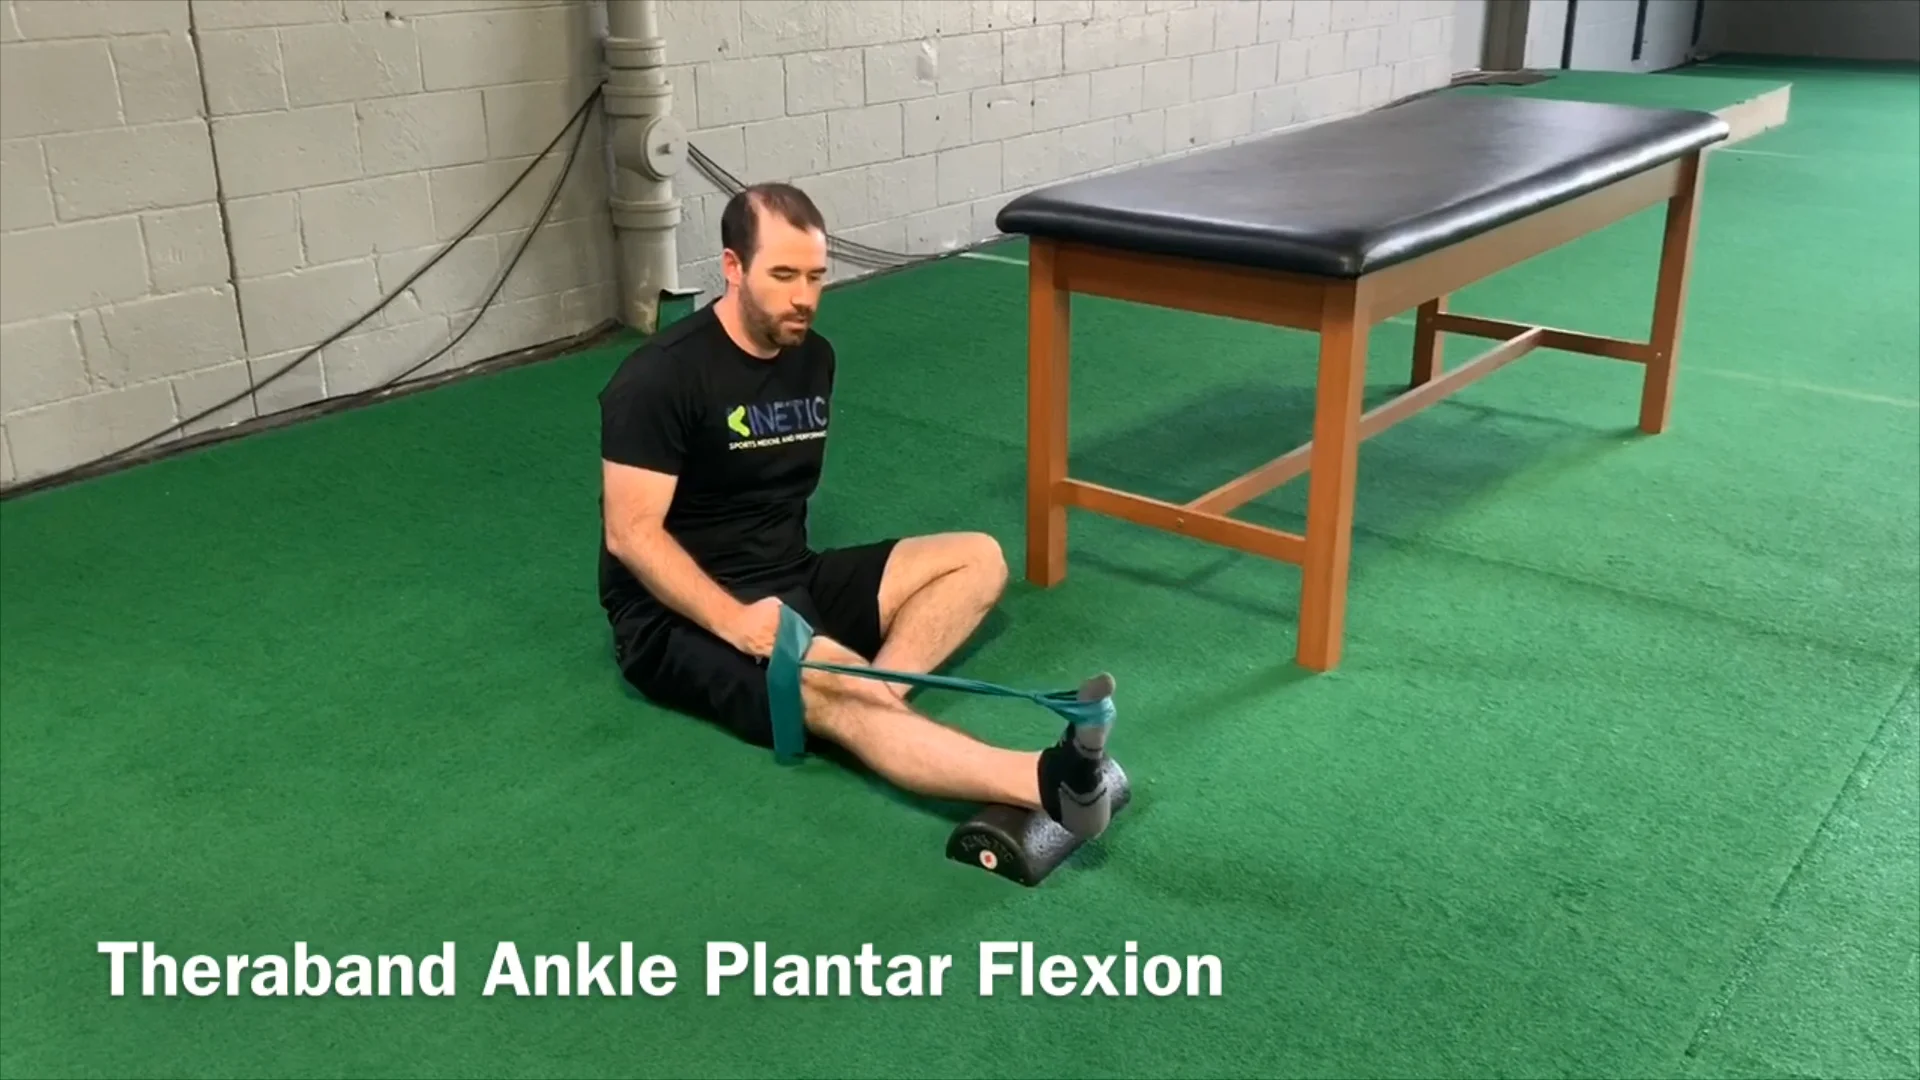 Theraband Ankle Plantar Flexion on Vimeo